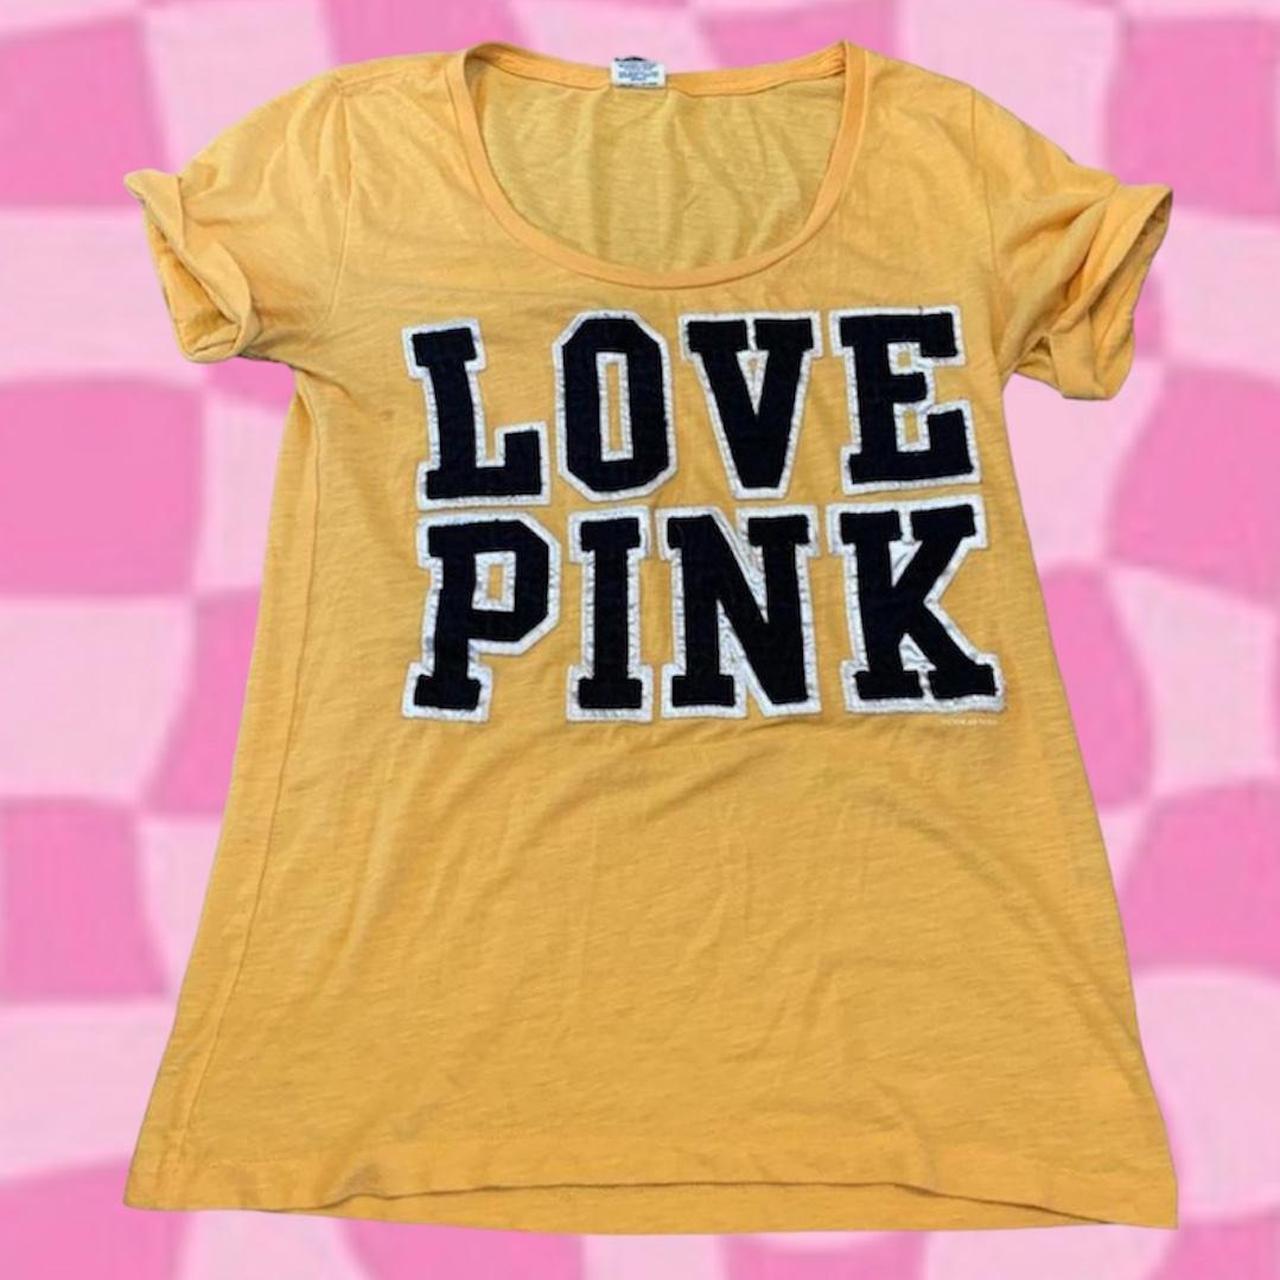 Women's size medium Victoria's secret's pink brand shirt